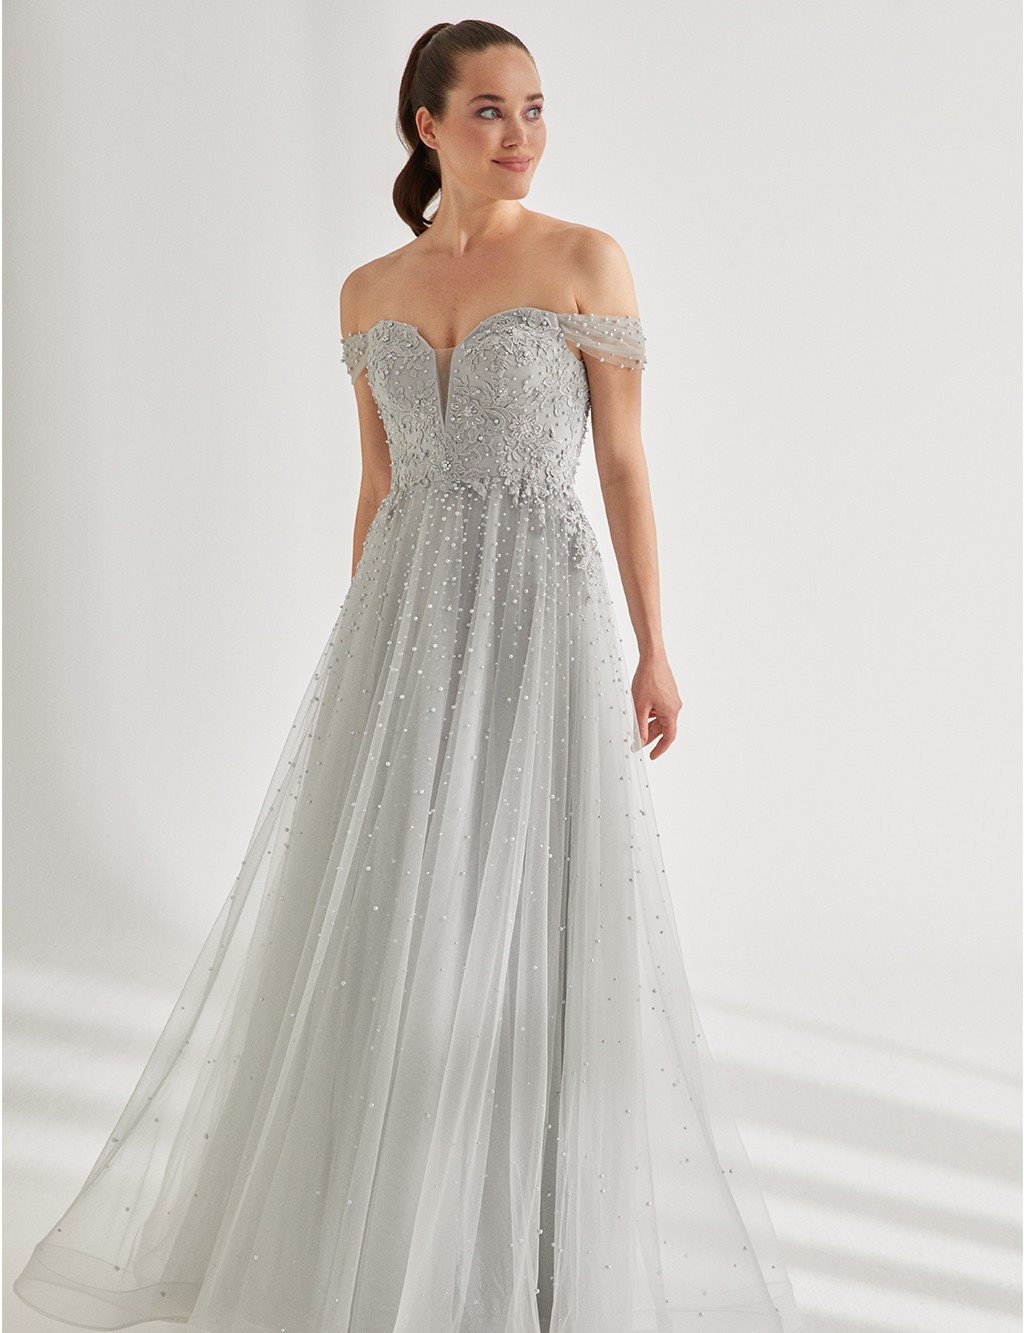 TIARA Pearl Strapless Evening Dress B9 26077 Grey